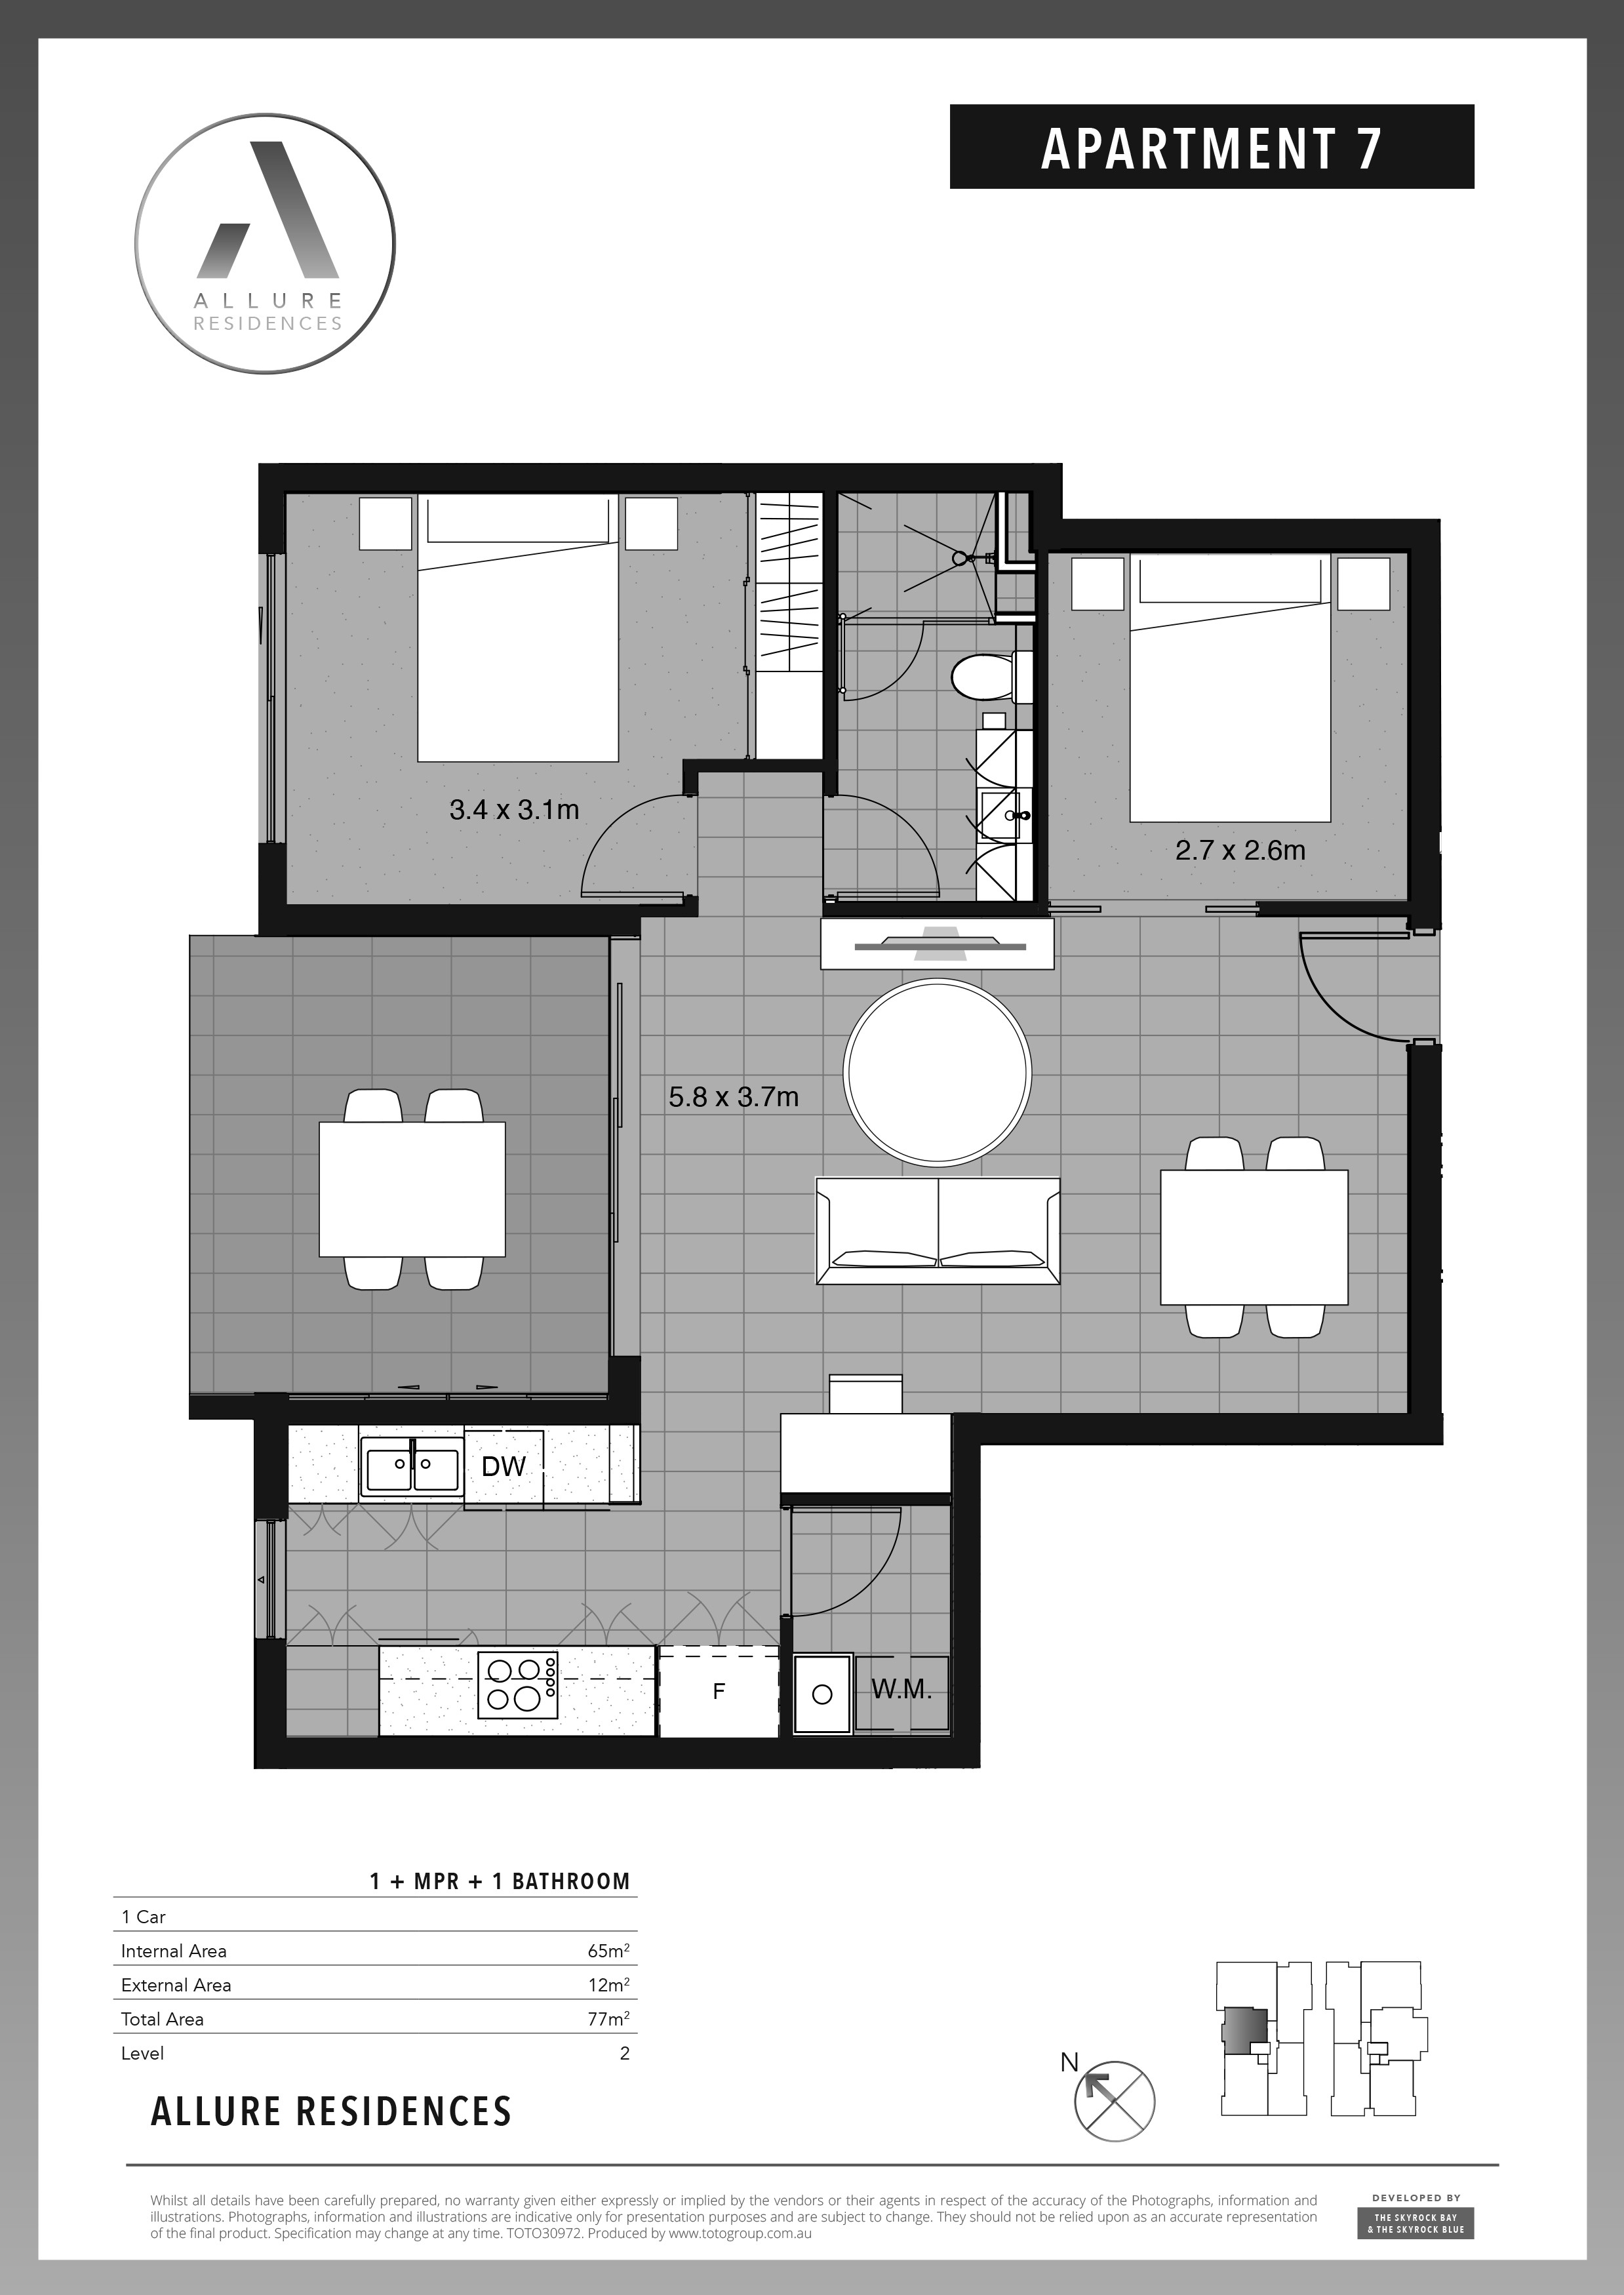 Allure - typical-1mpr-bedroom-floorplan